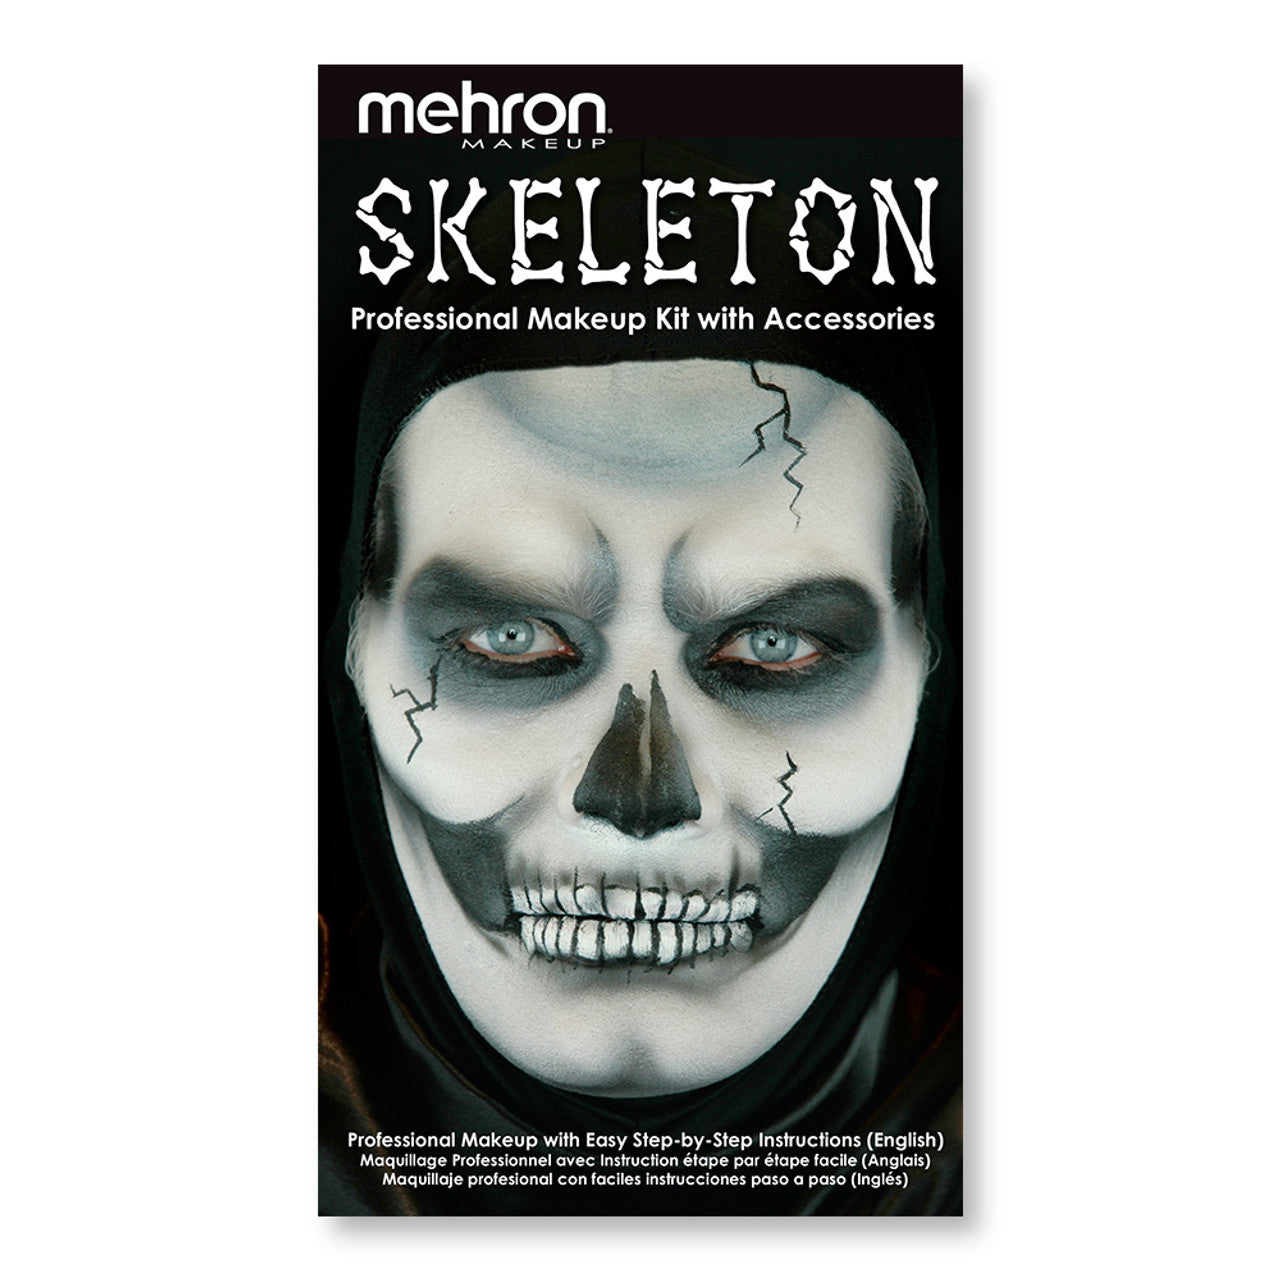 Mehron Character Kits